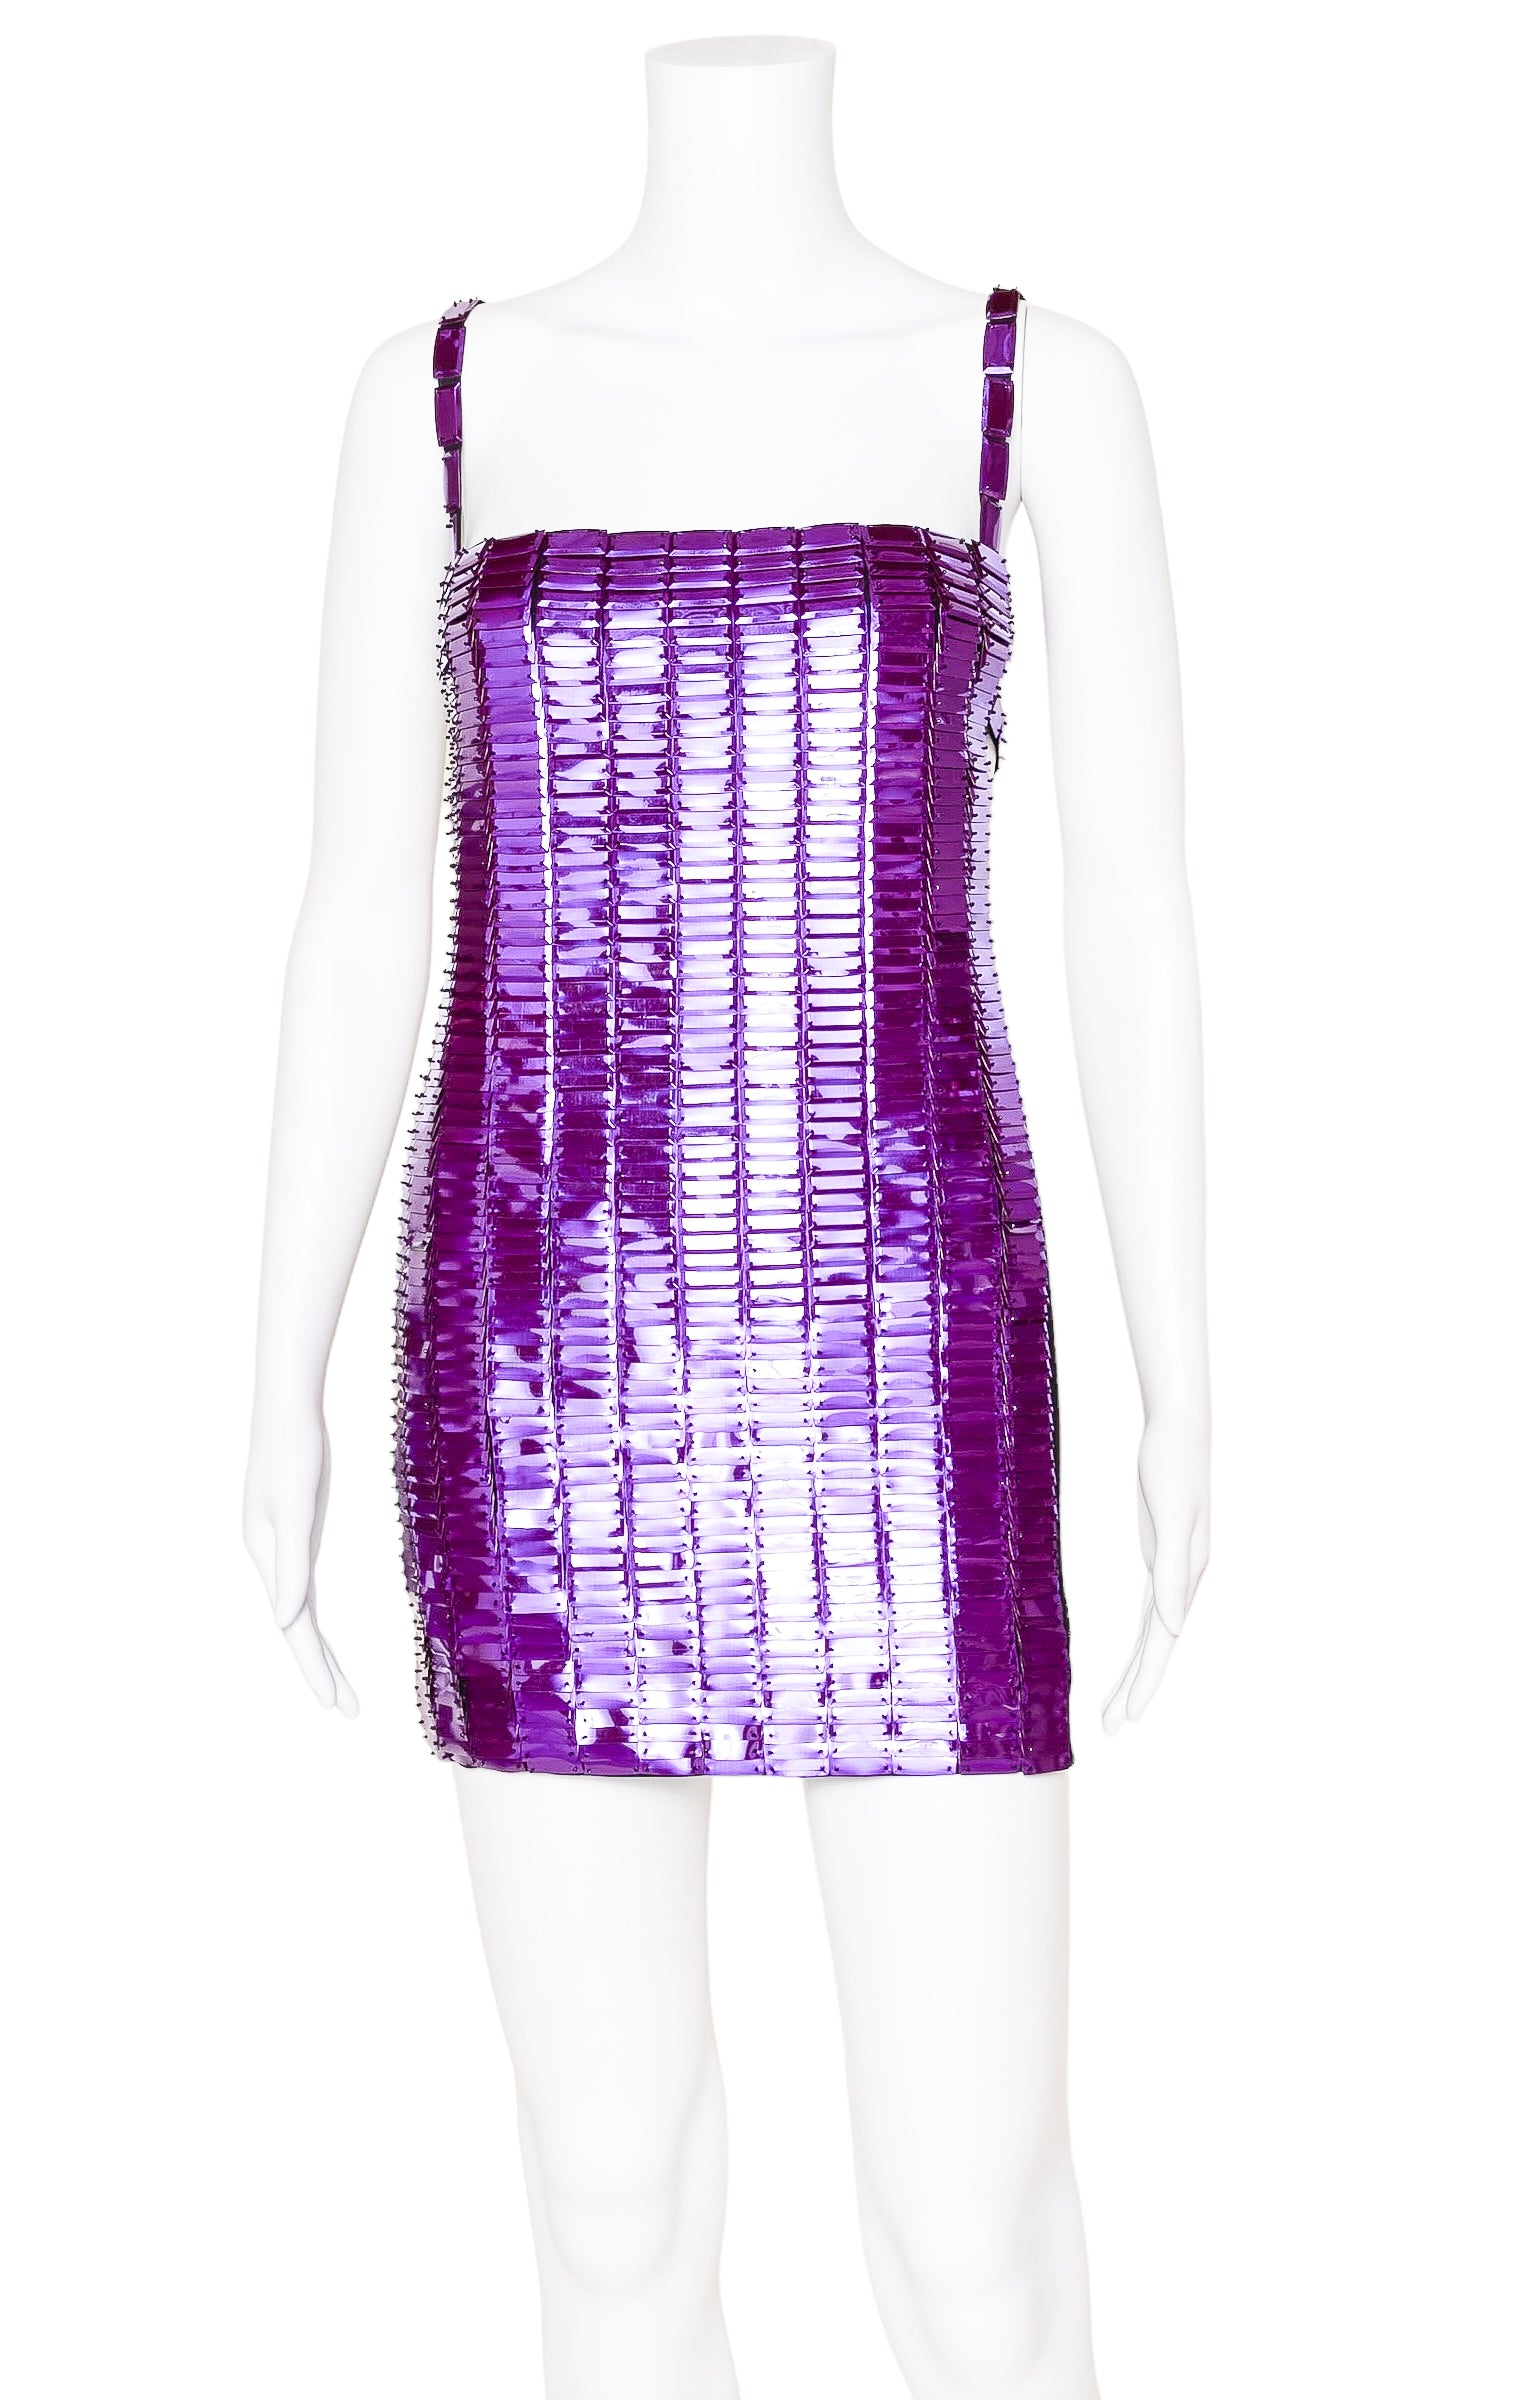 THE ATTICO Dress Size: No size tags, fits like XS